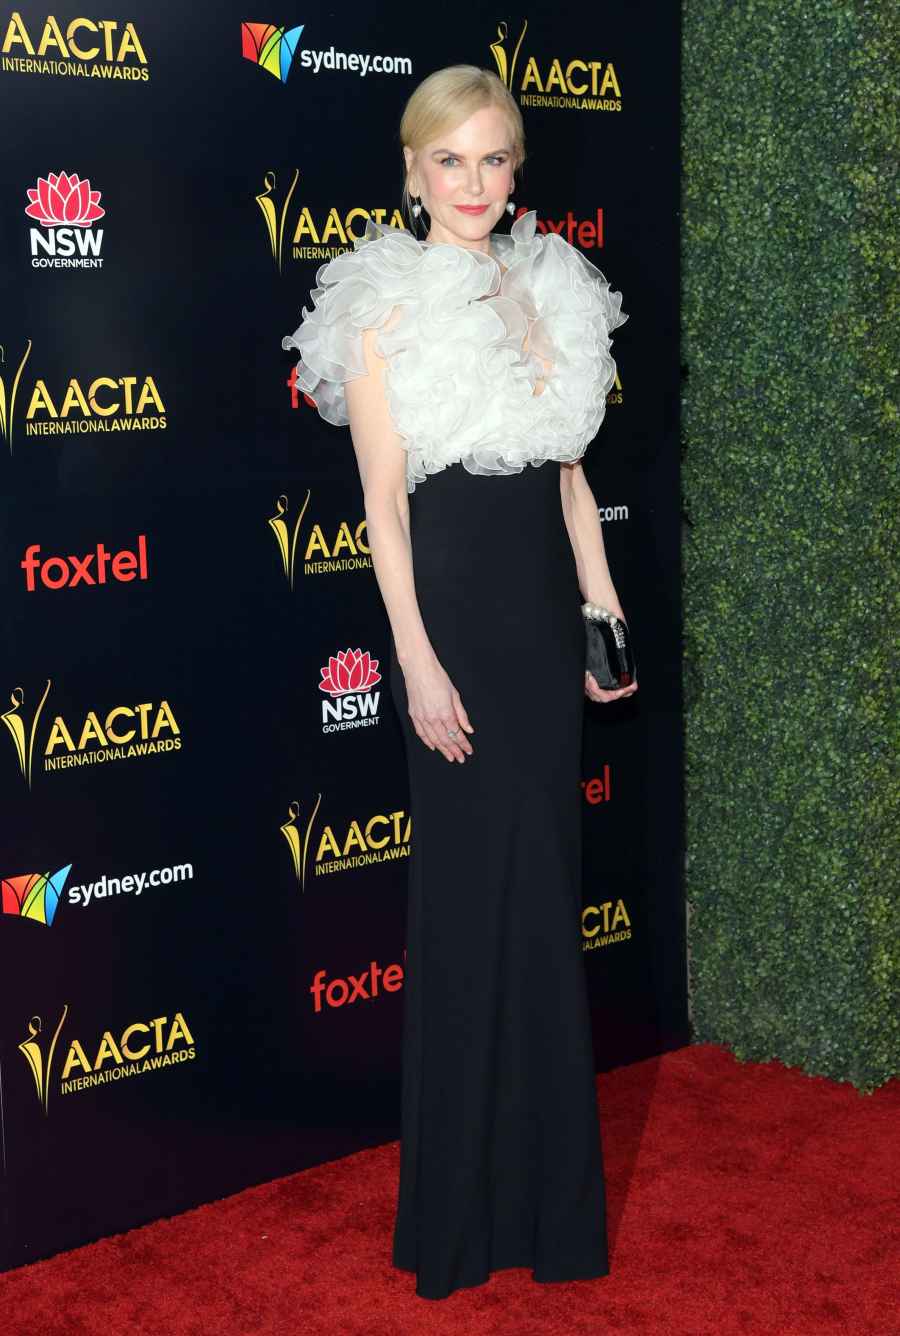 Nicole-Kidman-8th AACTA International Awards